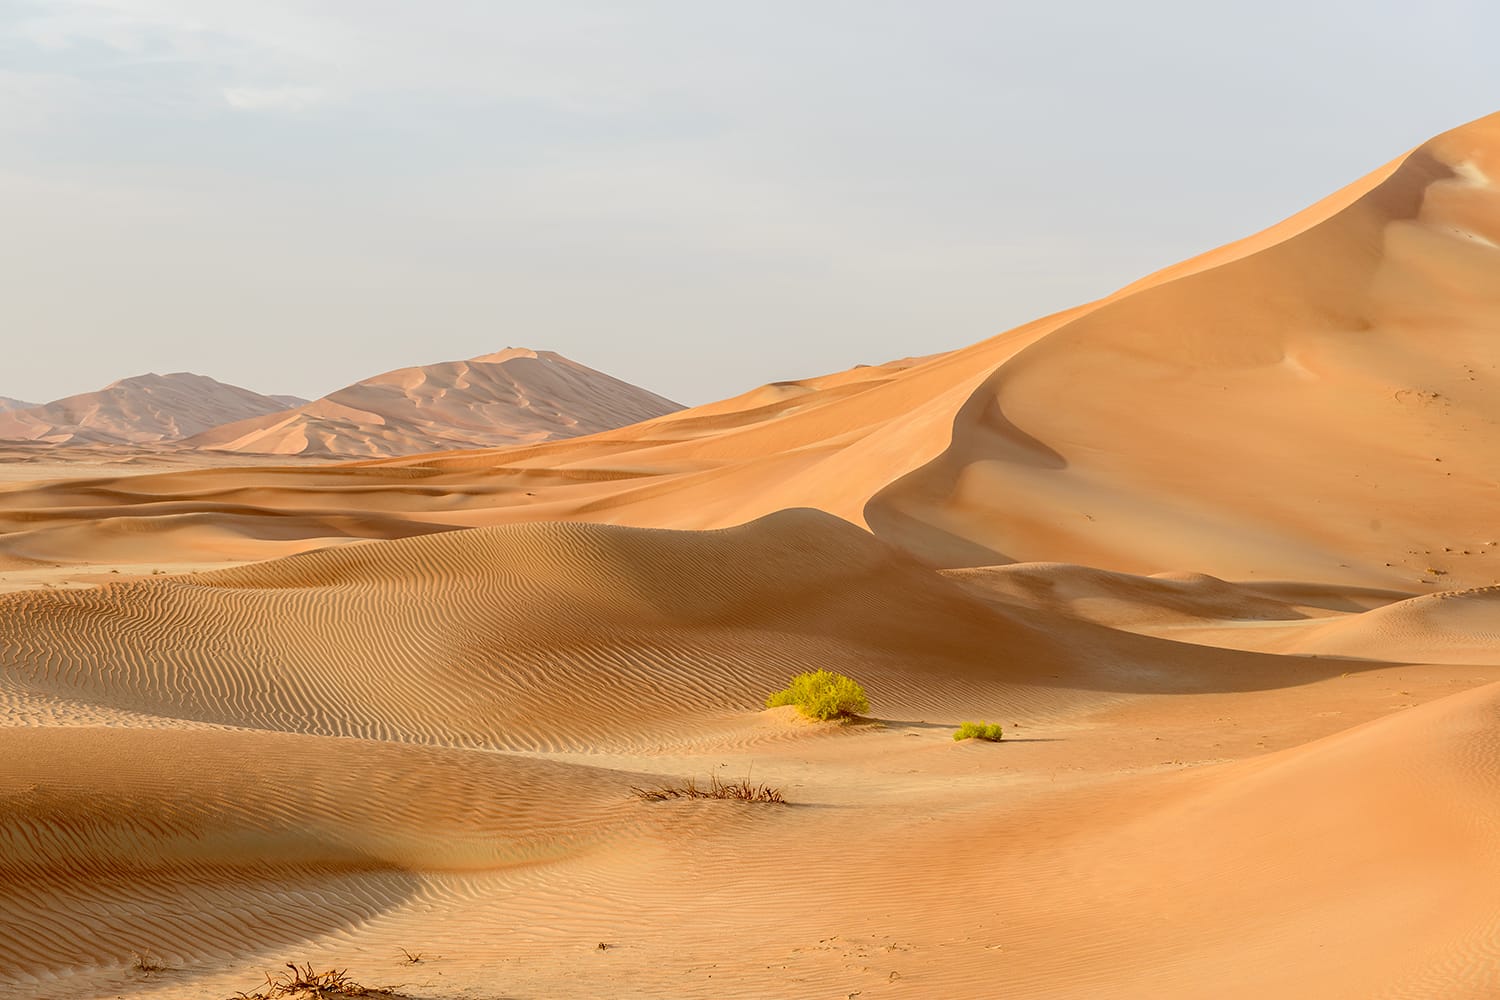 Sand dunes in Rub al-Khali desert, Dhofar region (Oman)